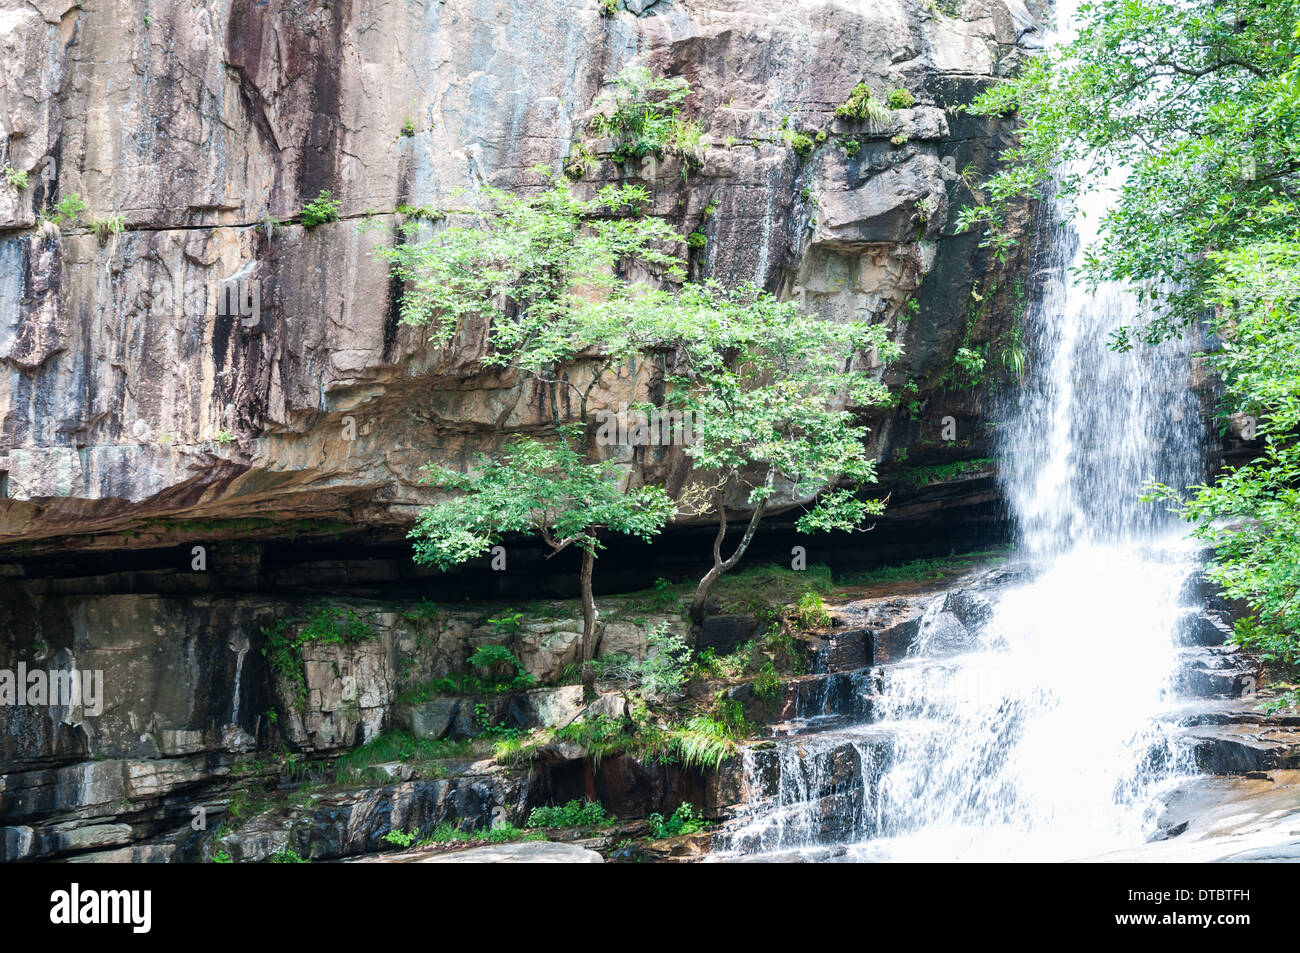 Waterfall in a jungle setting. Stock Photo